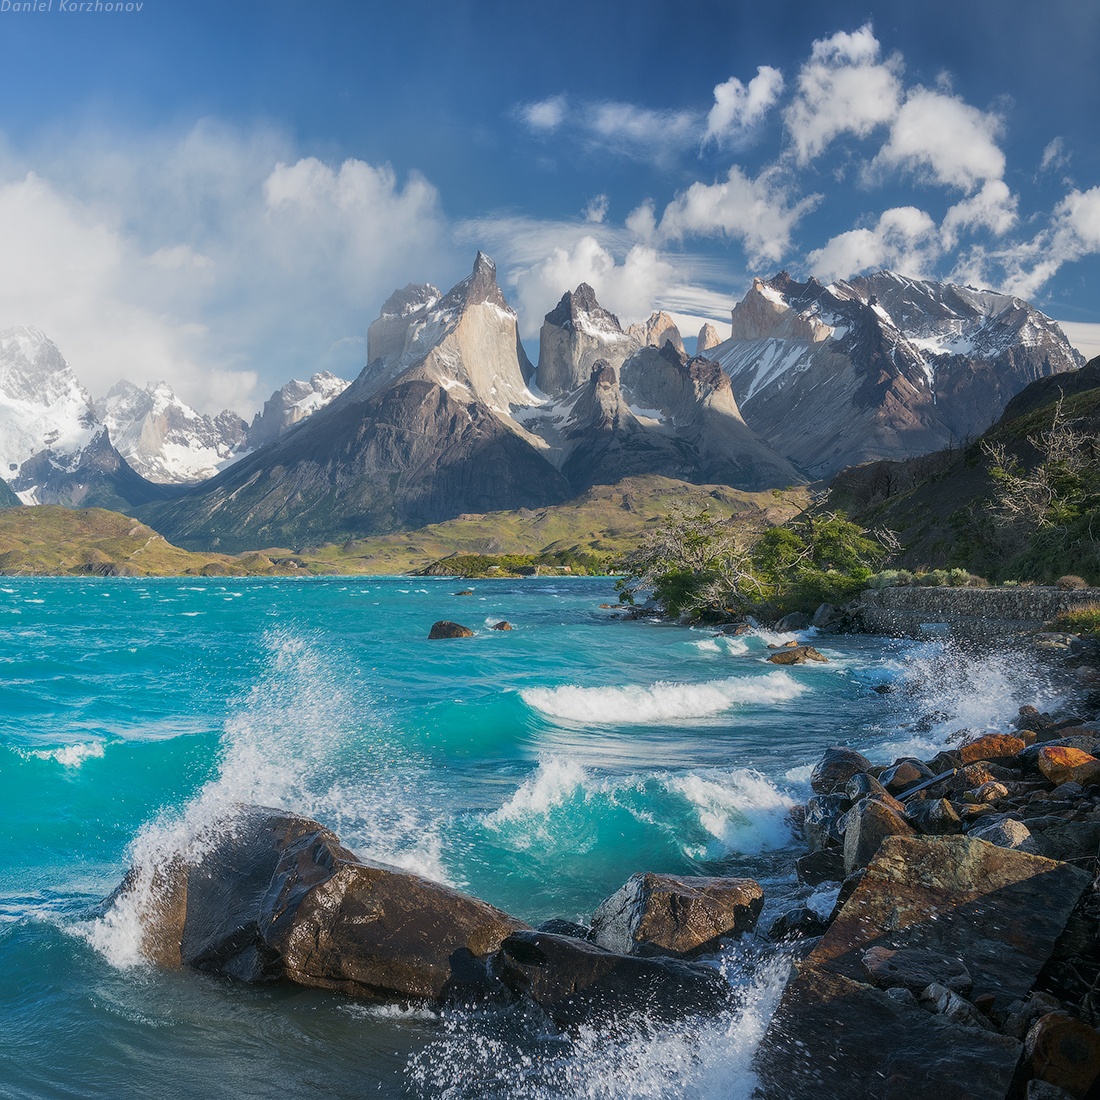  Lake Pehoe, Patagonia, Torres del Paine park by Daniel Kordan. [1100x1100] 